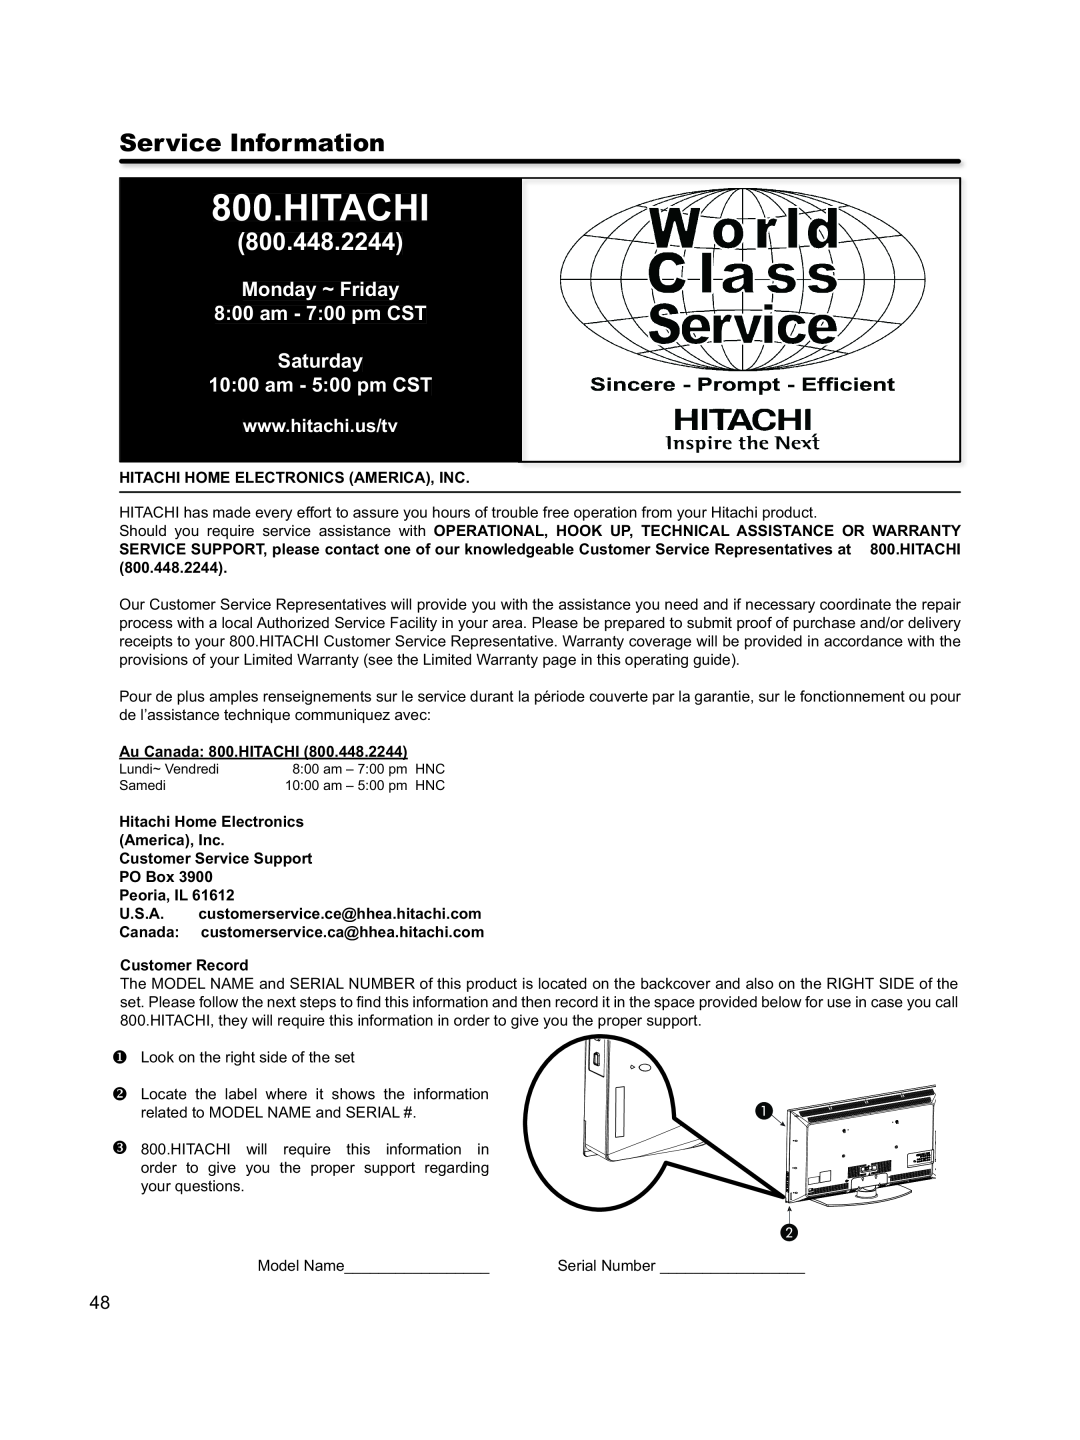 Hitachi L46S603 Service Information, 800.448.2244, Hitachi Home Electronics America, Inc, Au Canada 800.HITACHI 